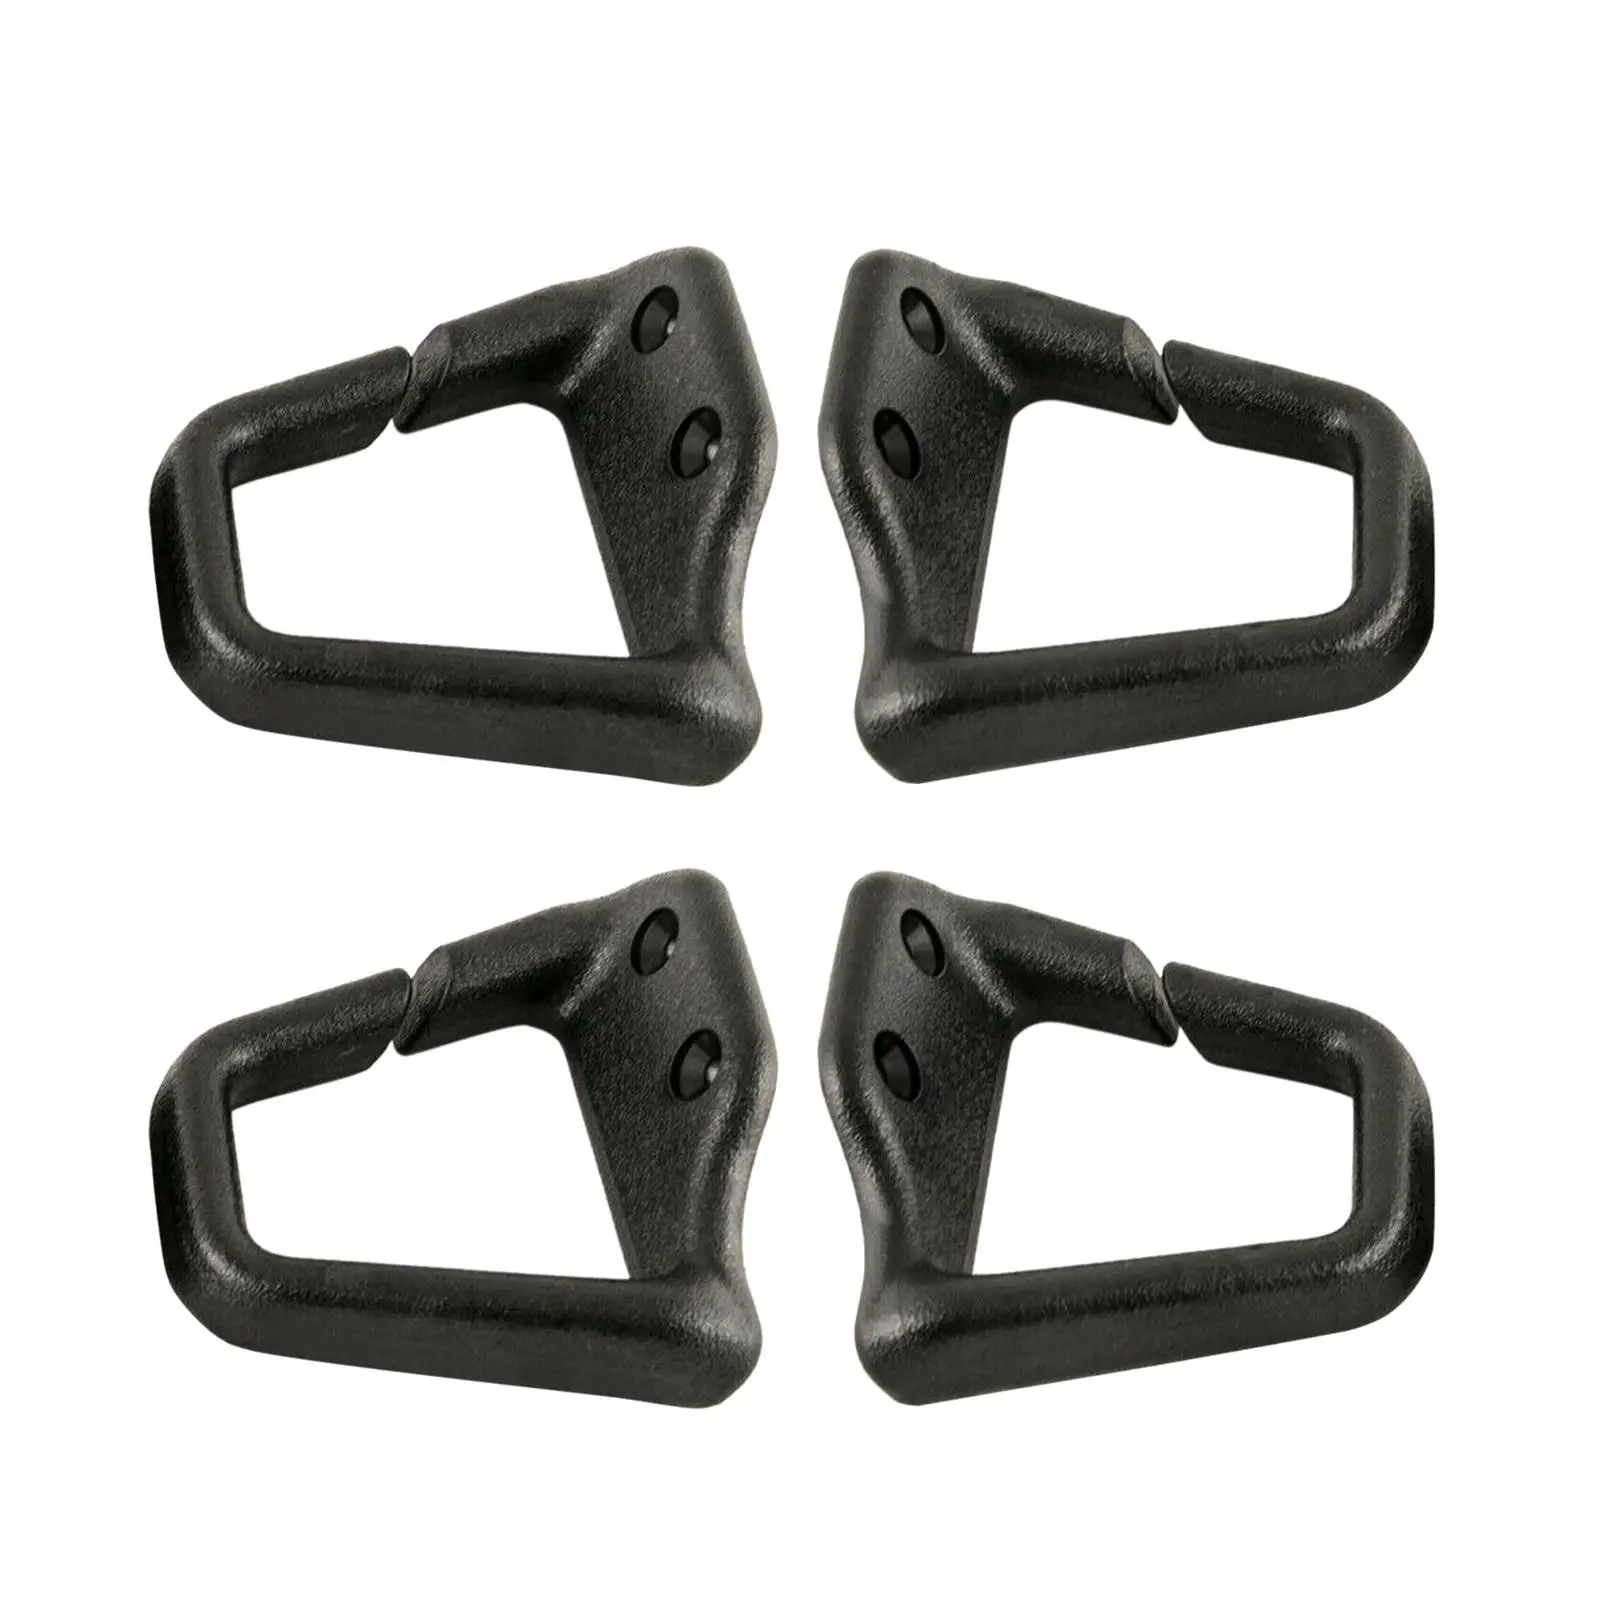 2x 2 Pieces  Belt Shoulder Guides Clamp Adjuster Buckle Stopper Safety  Clips 3-02 HT7203 HT7202